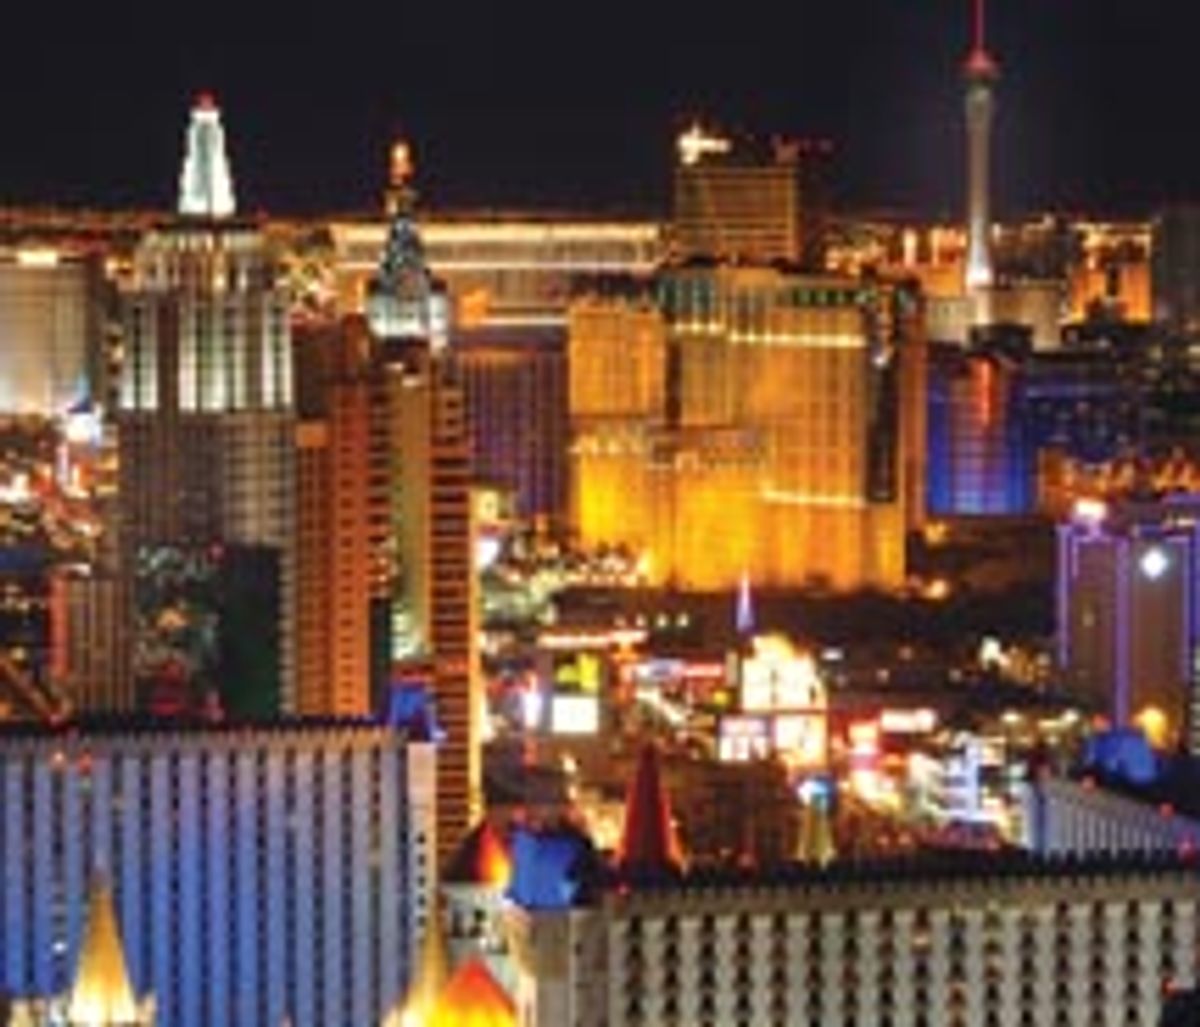 Virtuoso Network Offers ThreeDay Orientation and Job Fair in Las Vegas